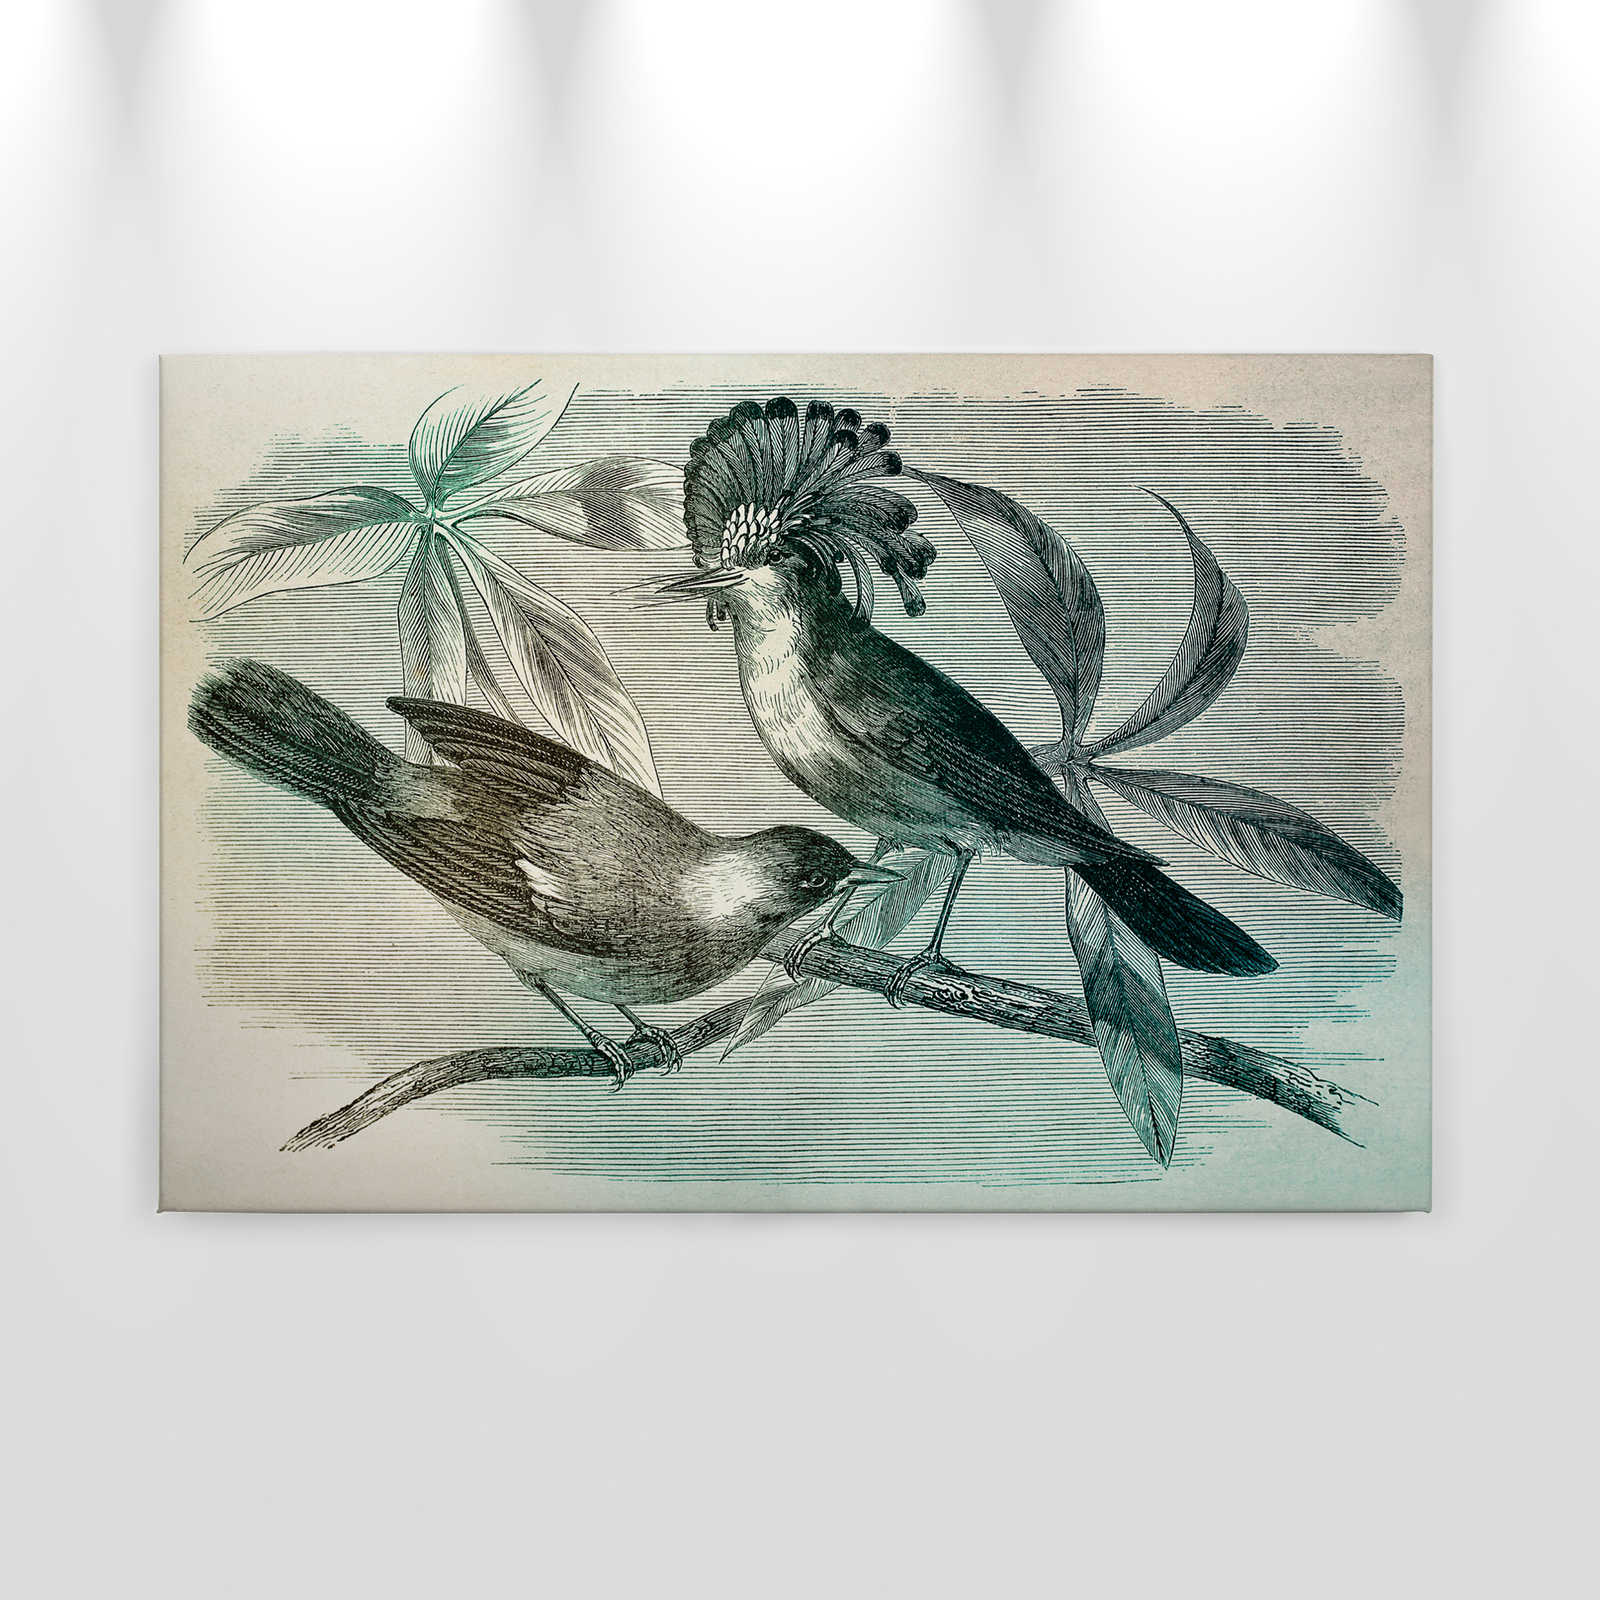             Canvas schilderij Vogelpatroon Retro Stijl - 0,90 m x 0,60 m
        